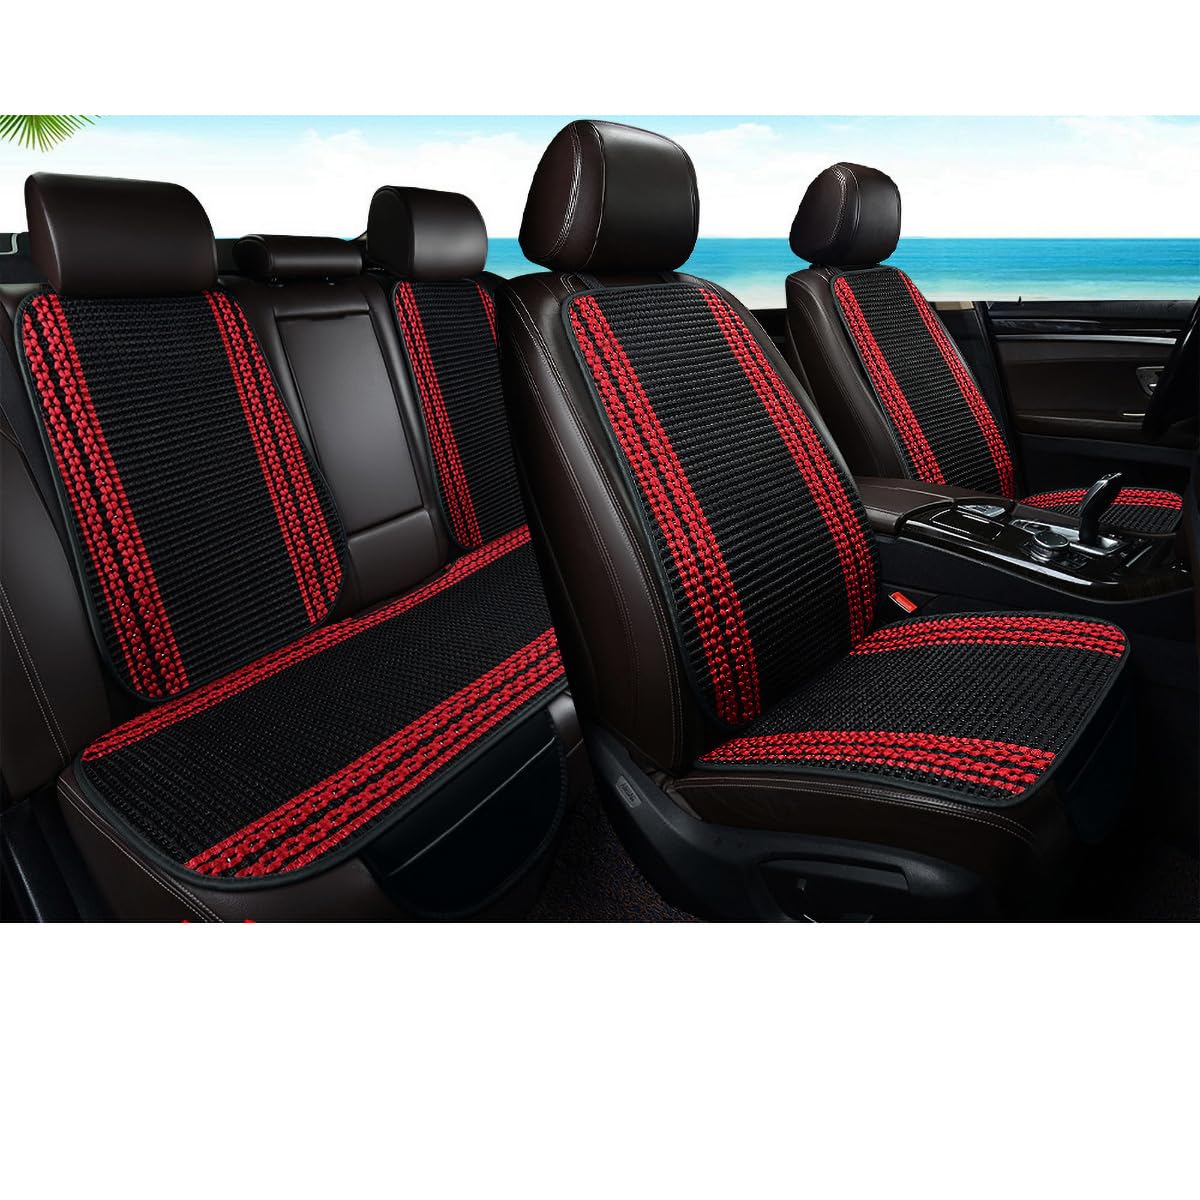 ASNAT Belüfteter Autositzbezug den Sommer für Hyundai I30 I30N 2018 2019 2020 2021, Atmungsaktiv Und Bequem, Anti Rutsch Autositzschoner,A-black-7PCS von ASNAT